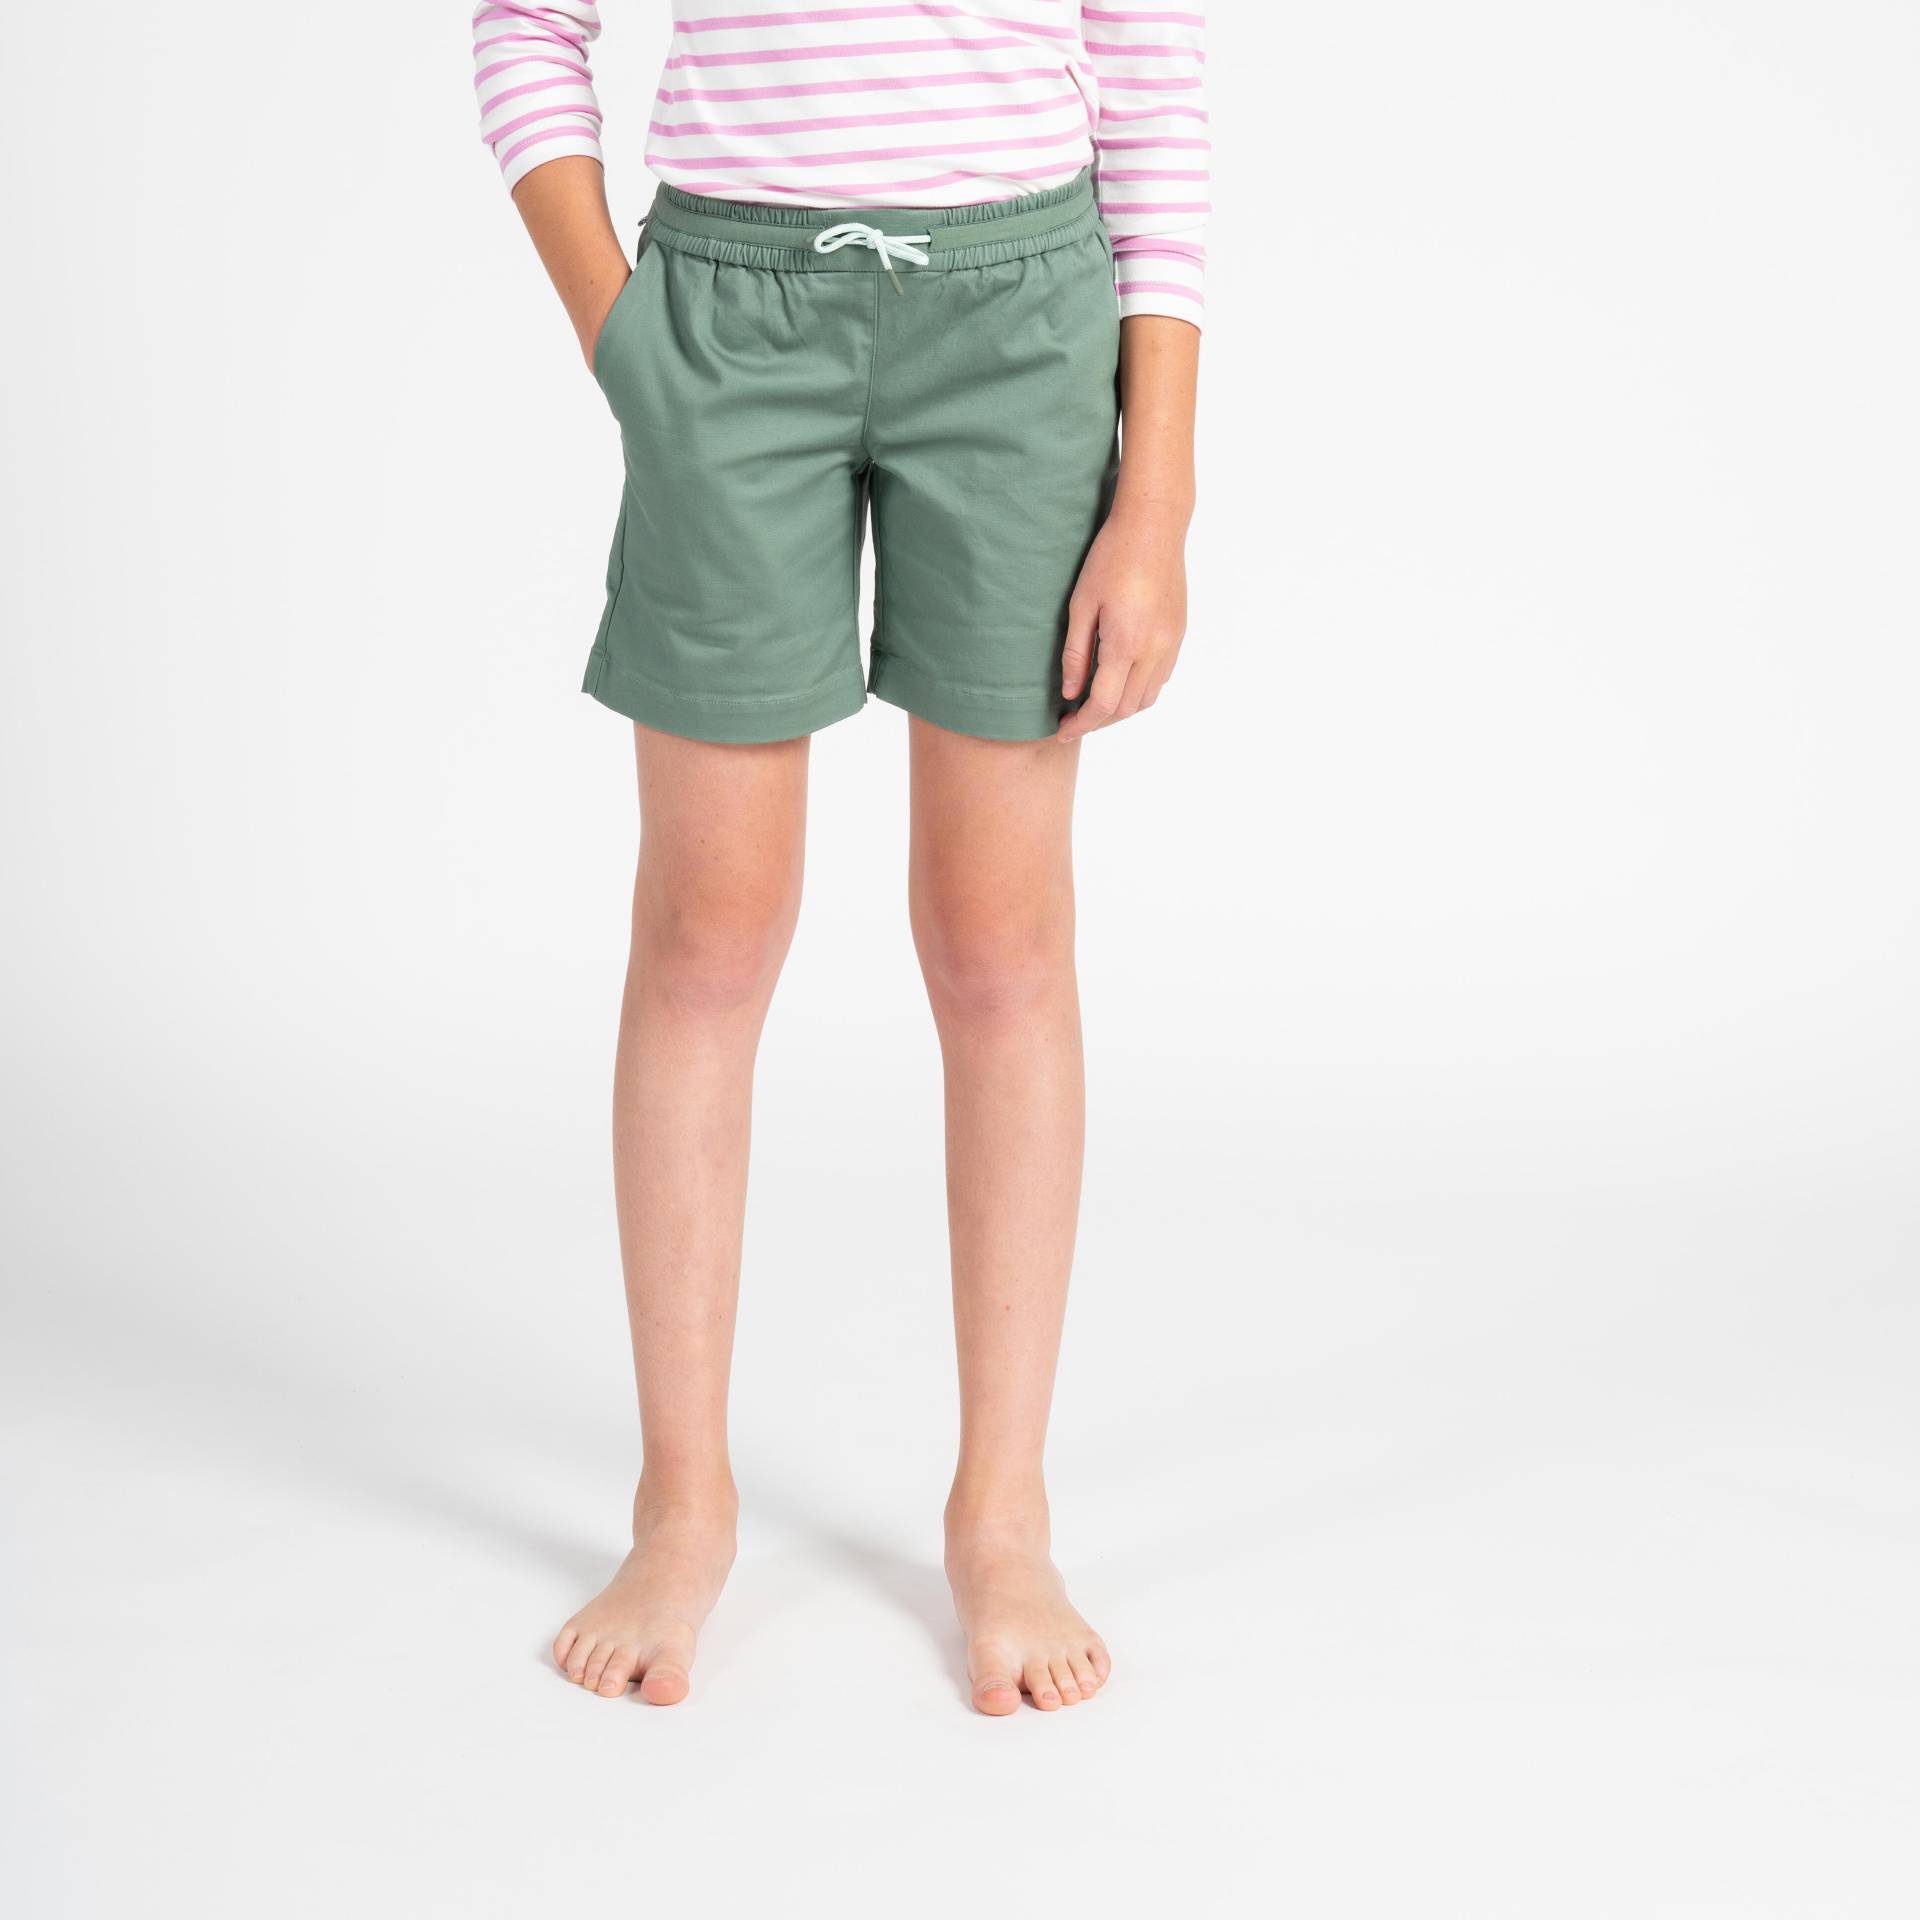 Segelshorts Kinder Mädchen - Sailing 100 khaki von TRIBORD